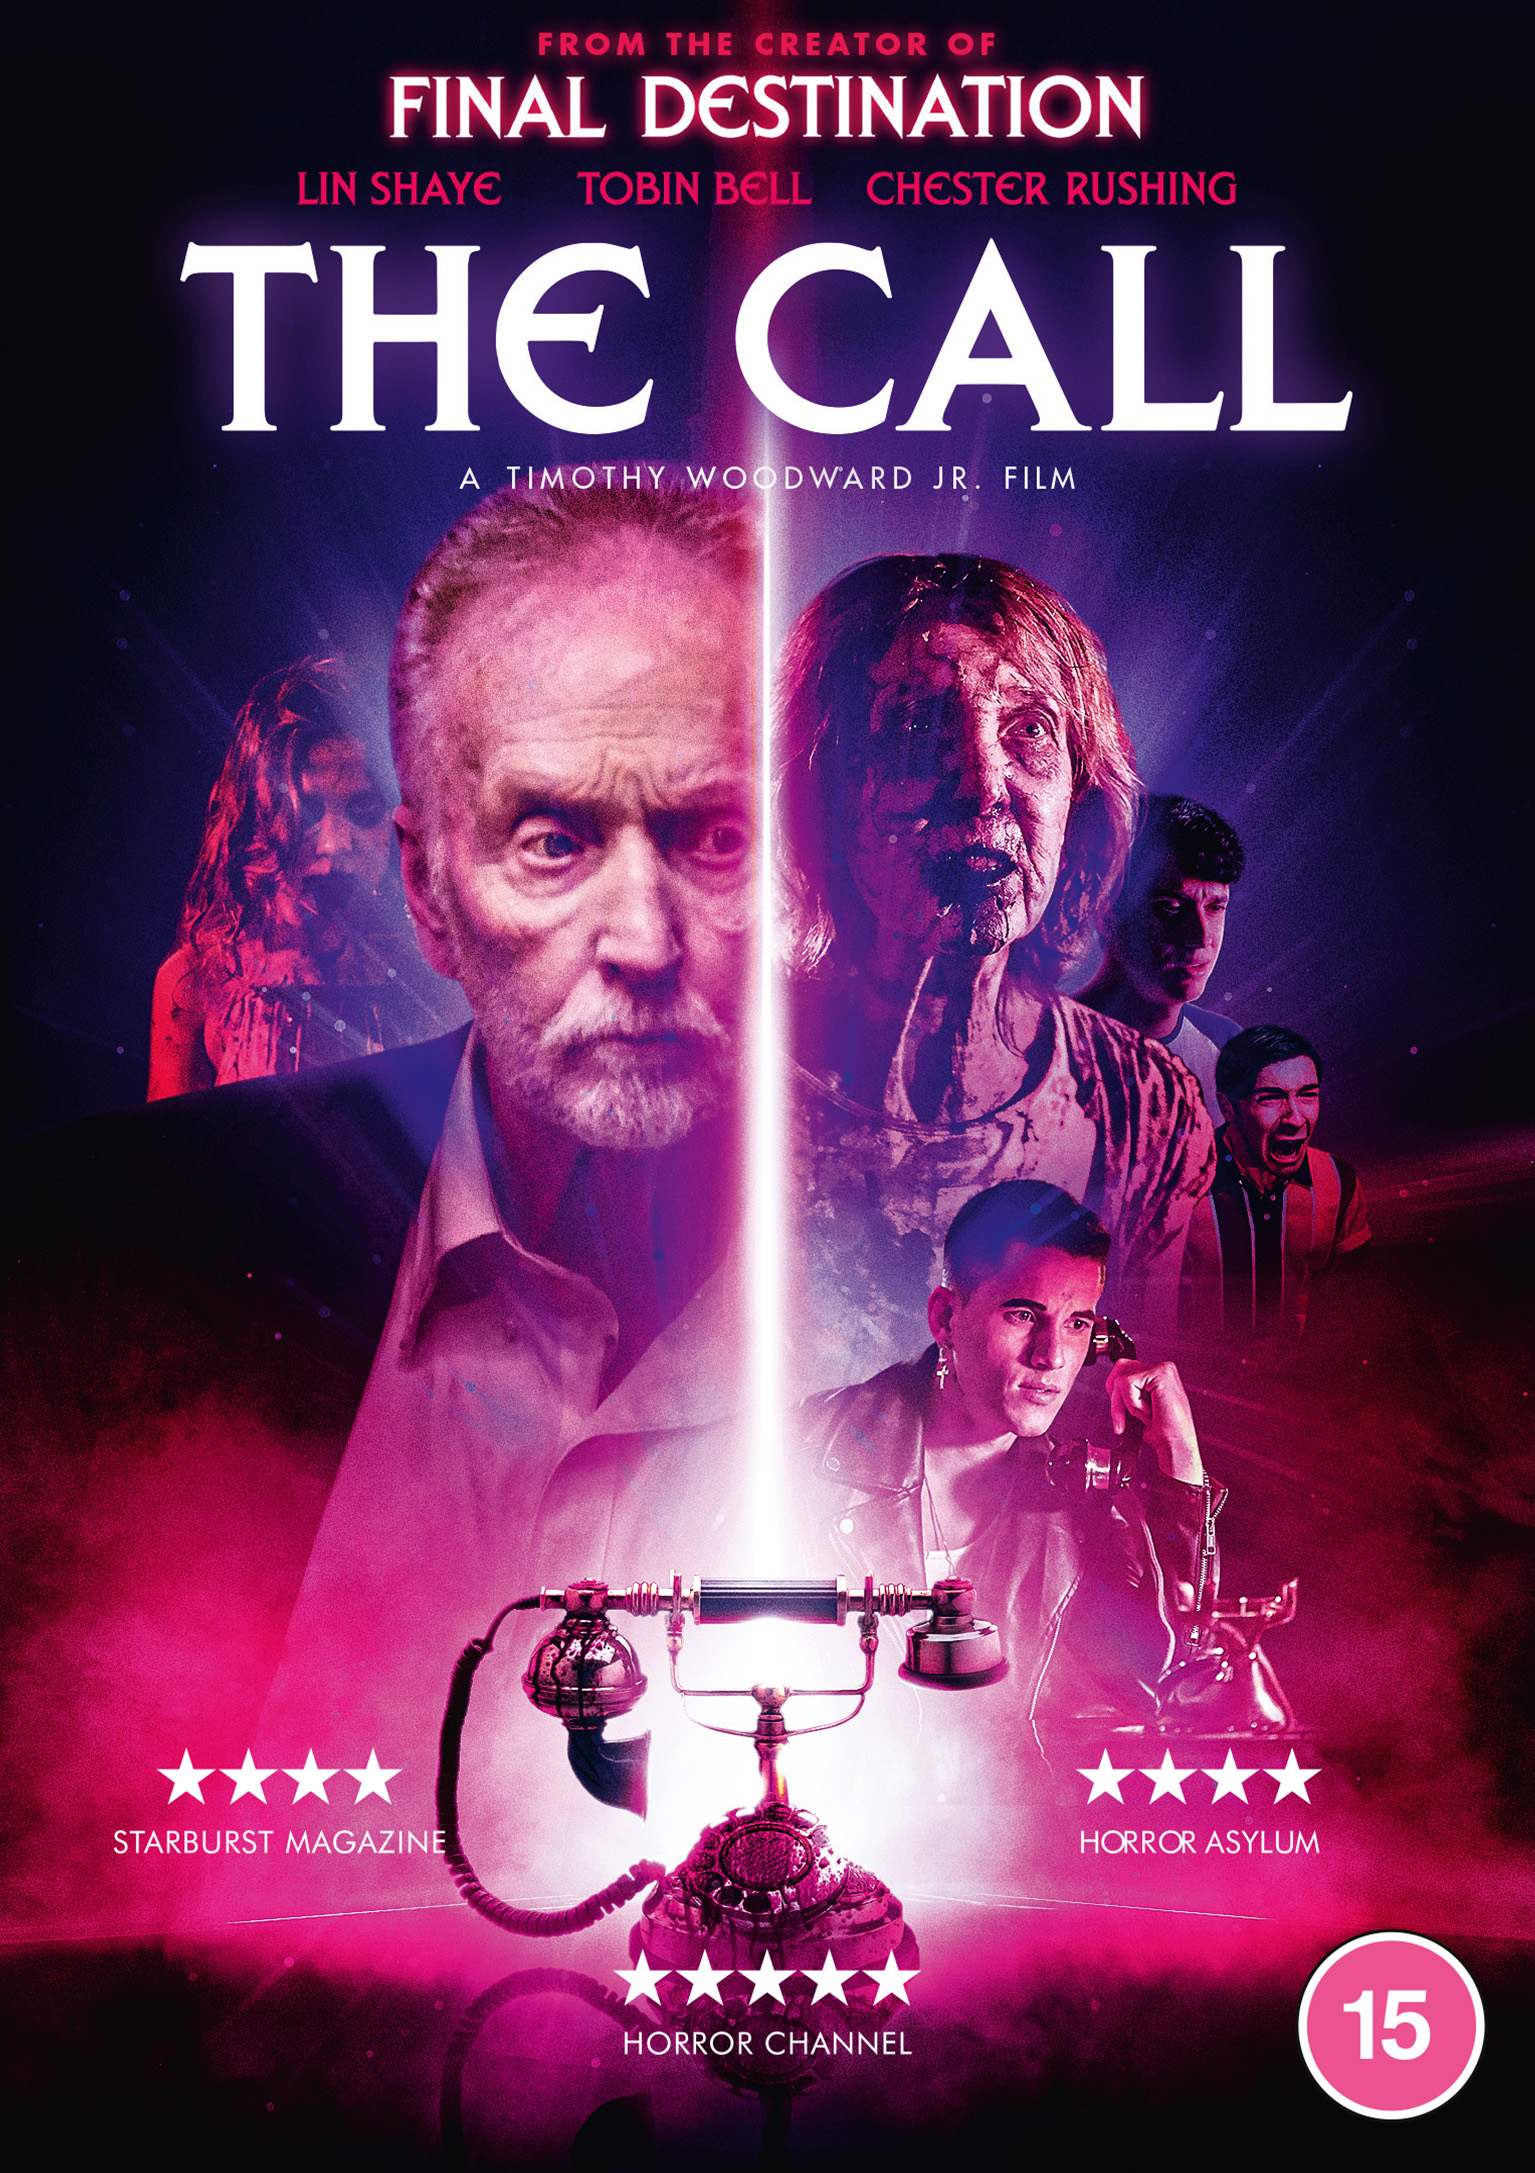 The Call DVD Artwork